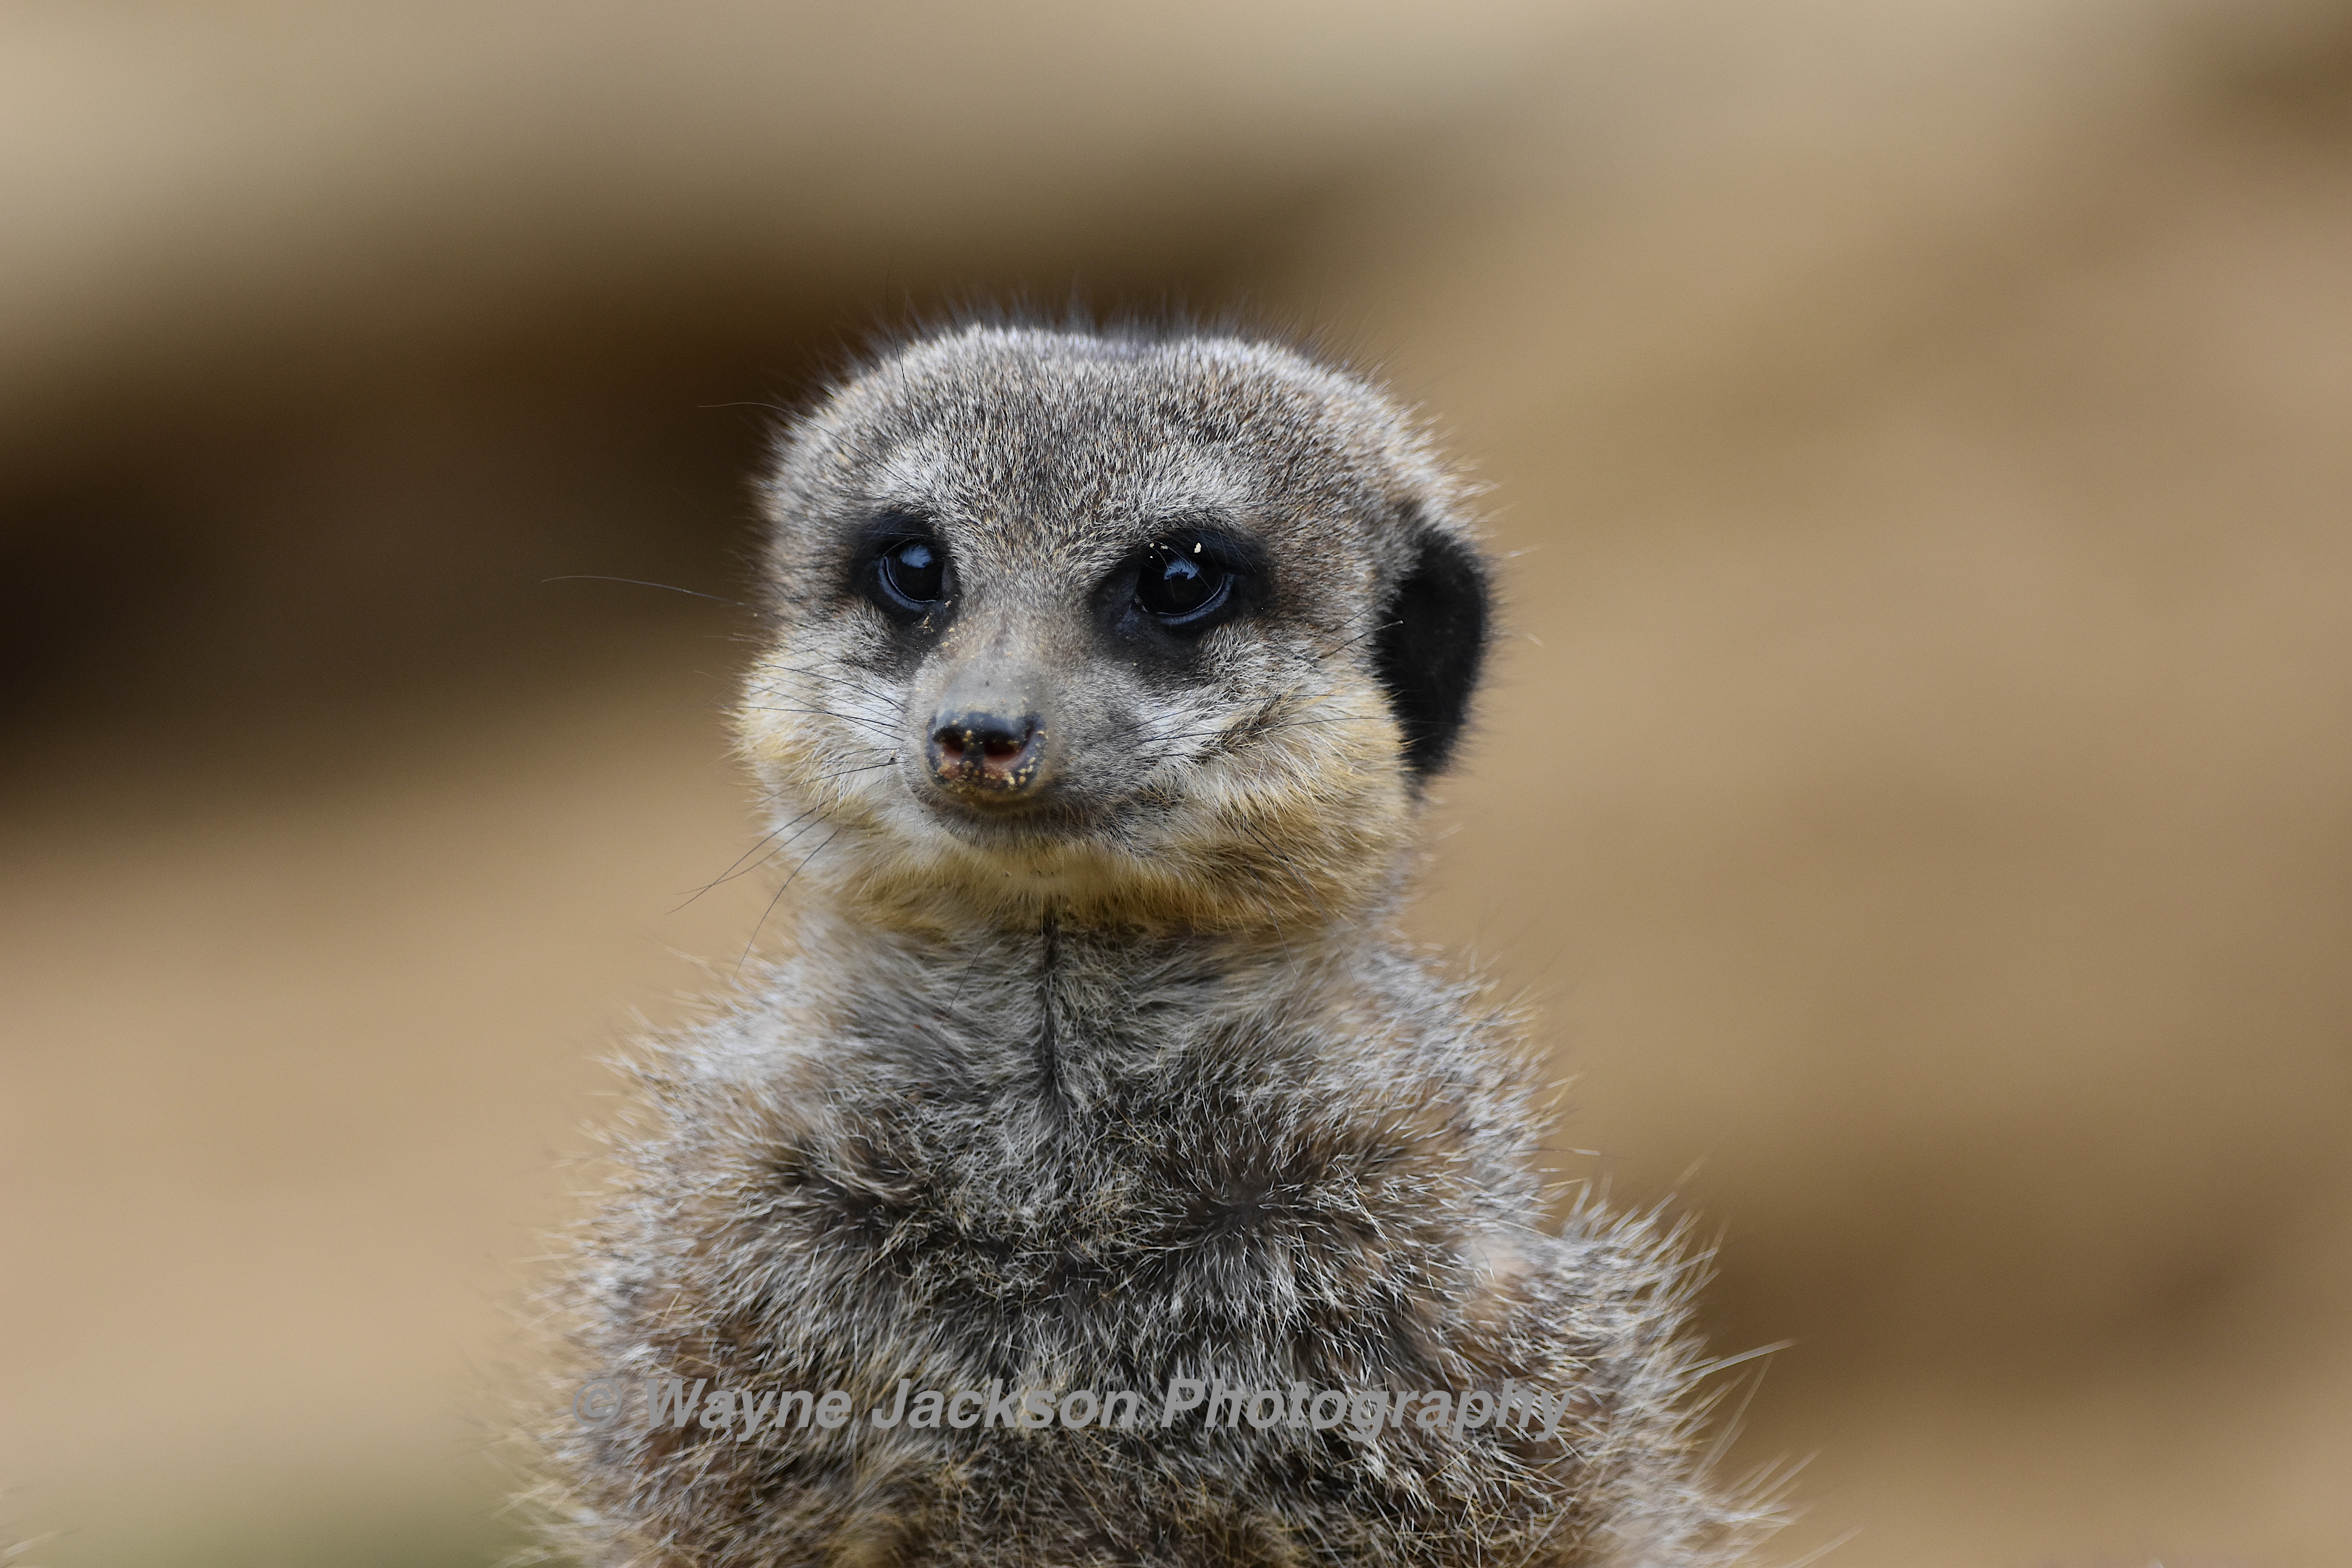 A single meerkat